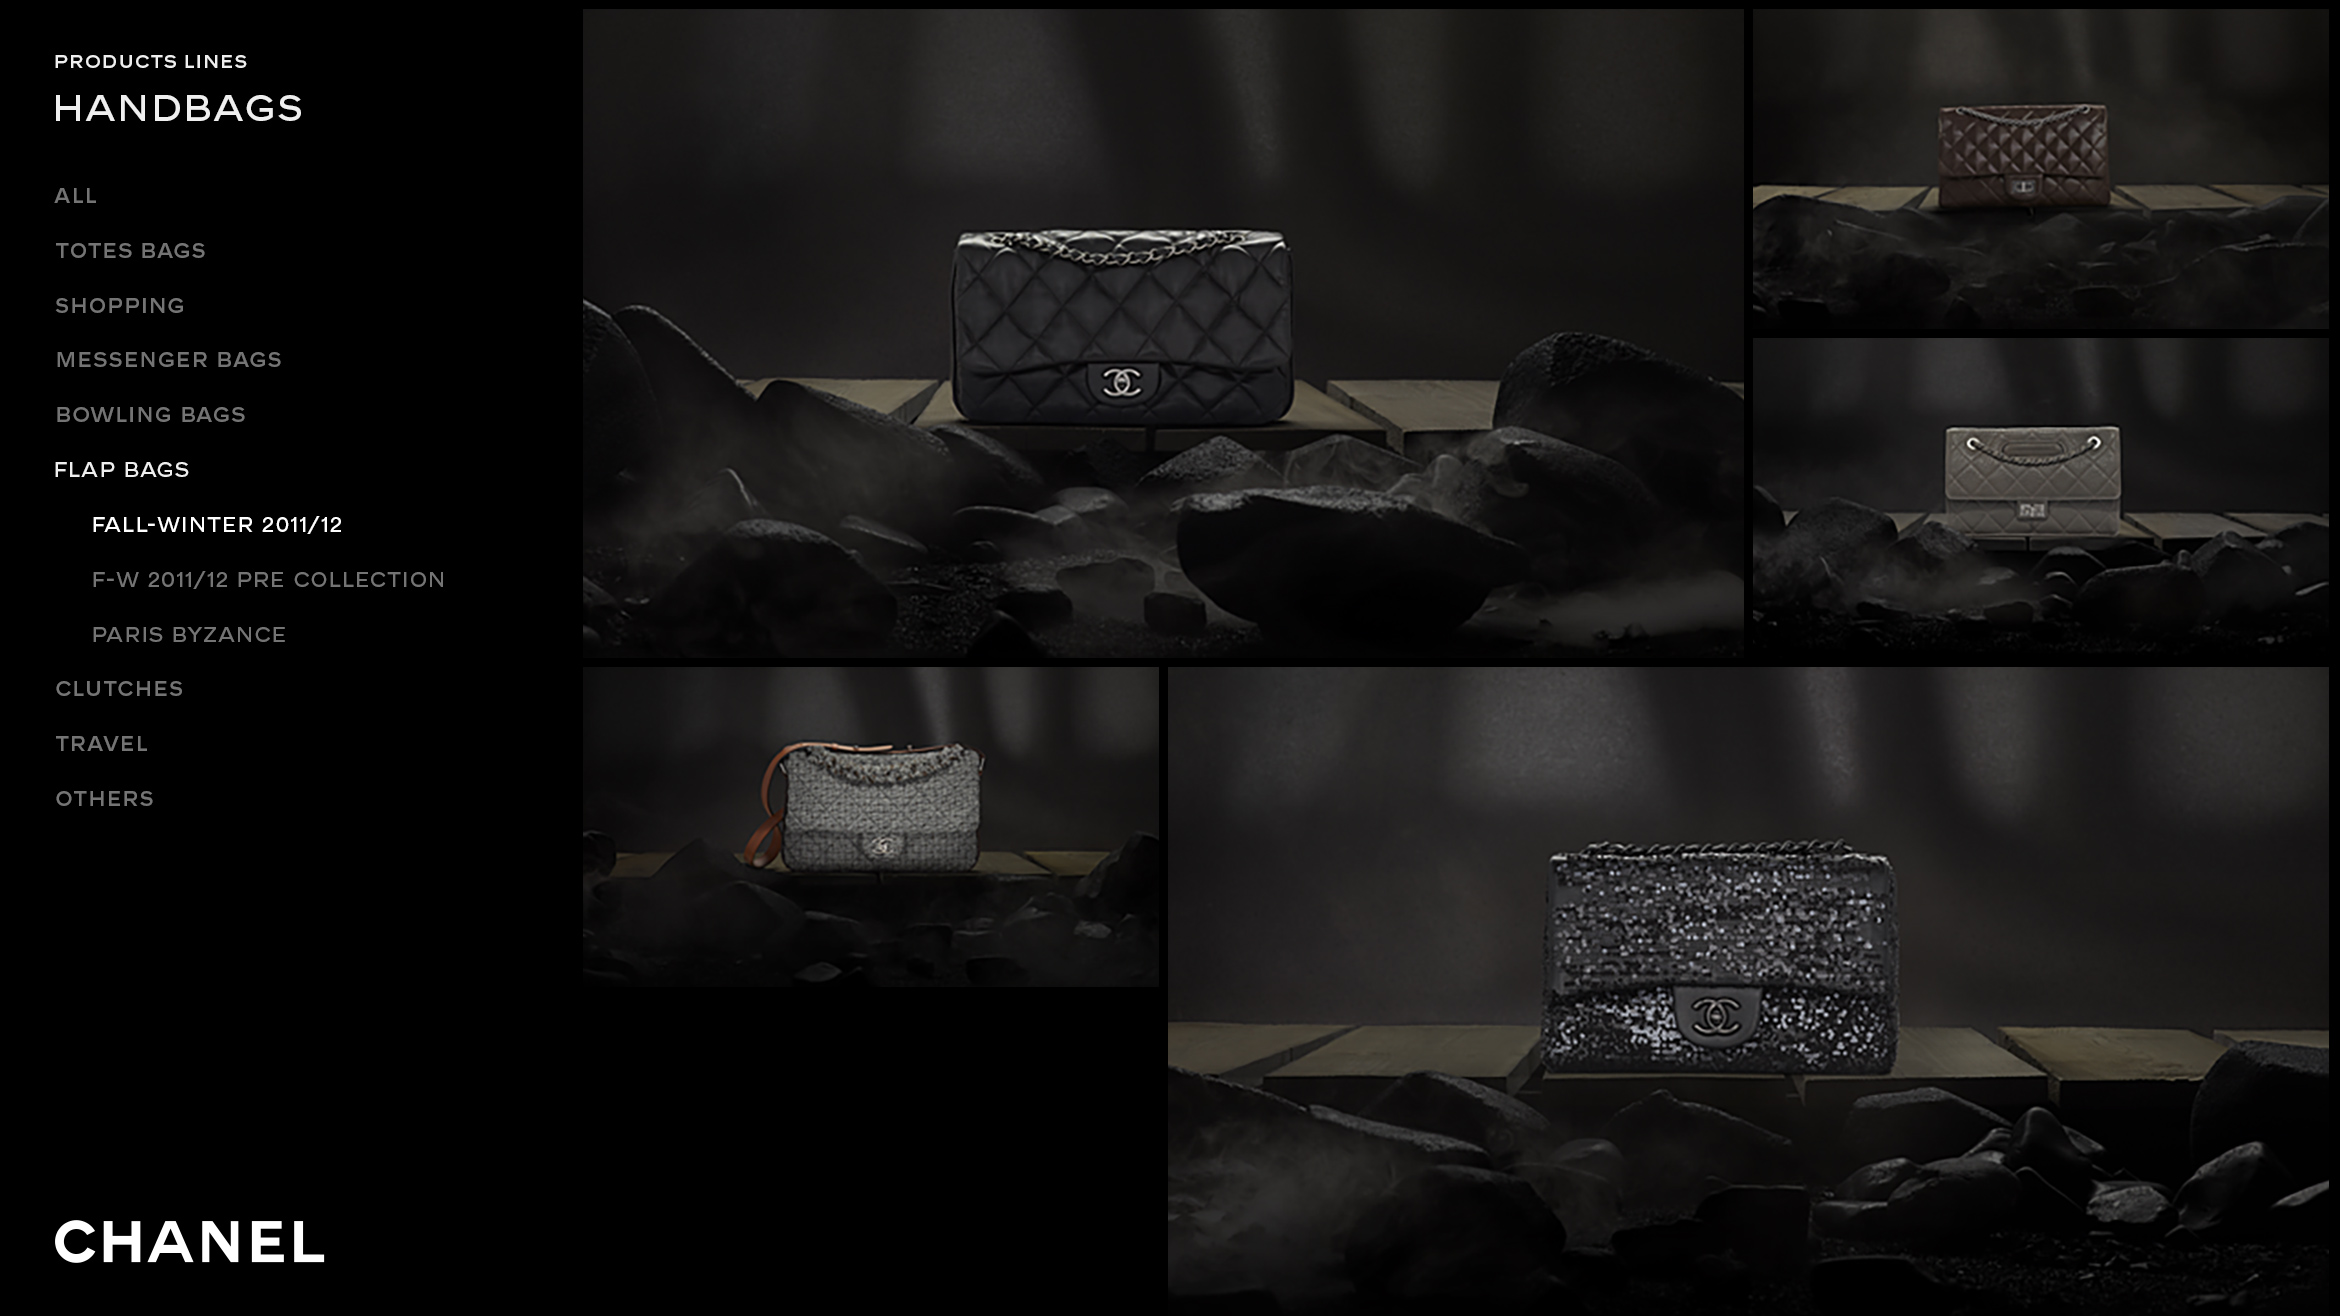 Chanel_Fashion_Product_Handbag_1